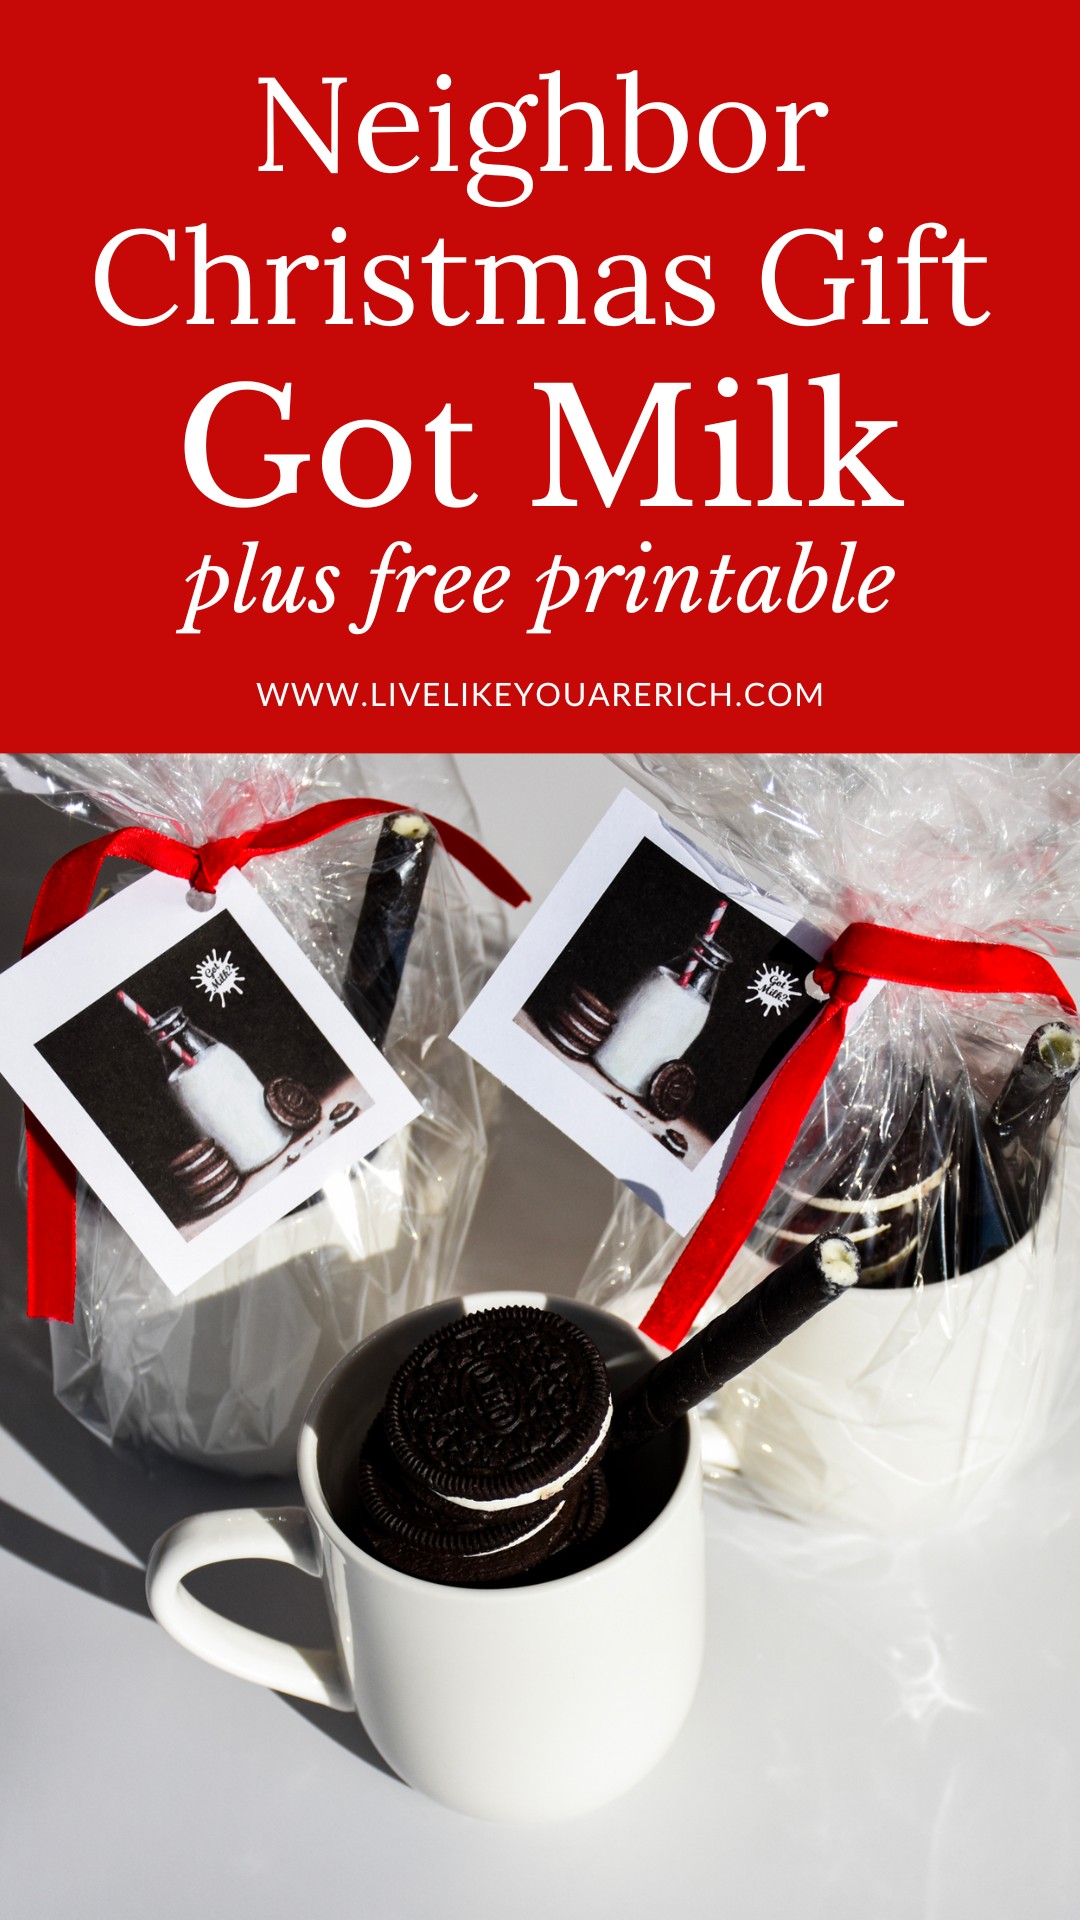 Neighbor Christmas Gift: Got Milk? Plus Free Printable